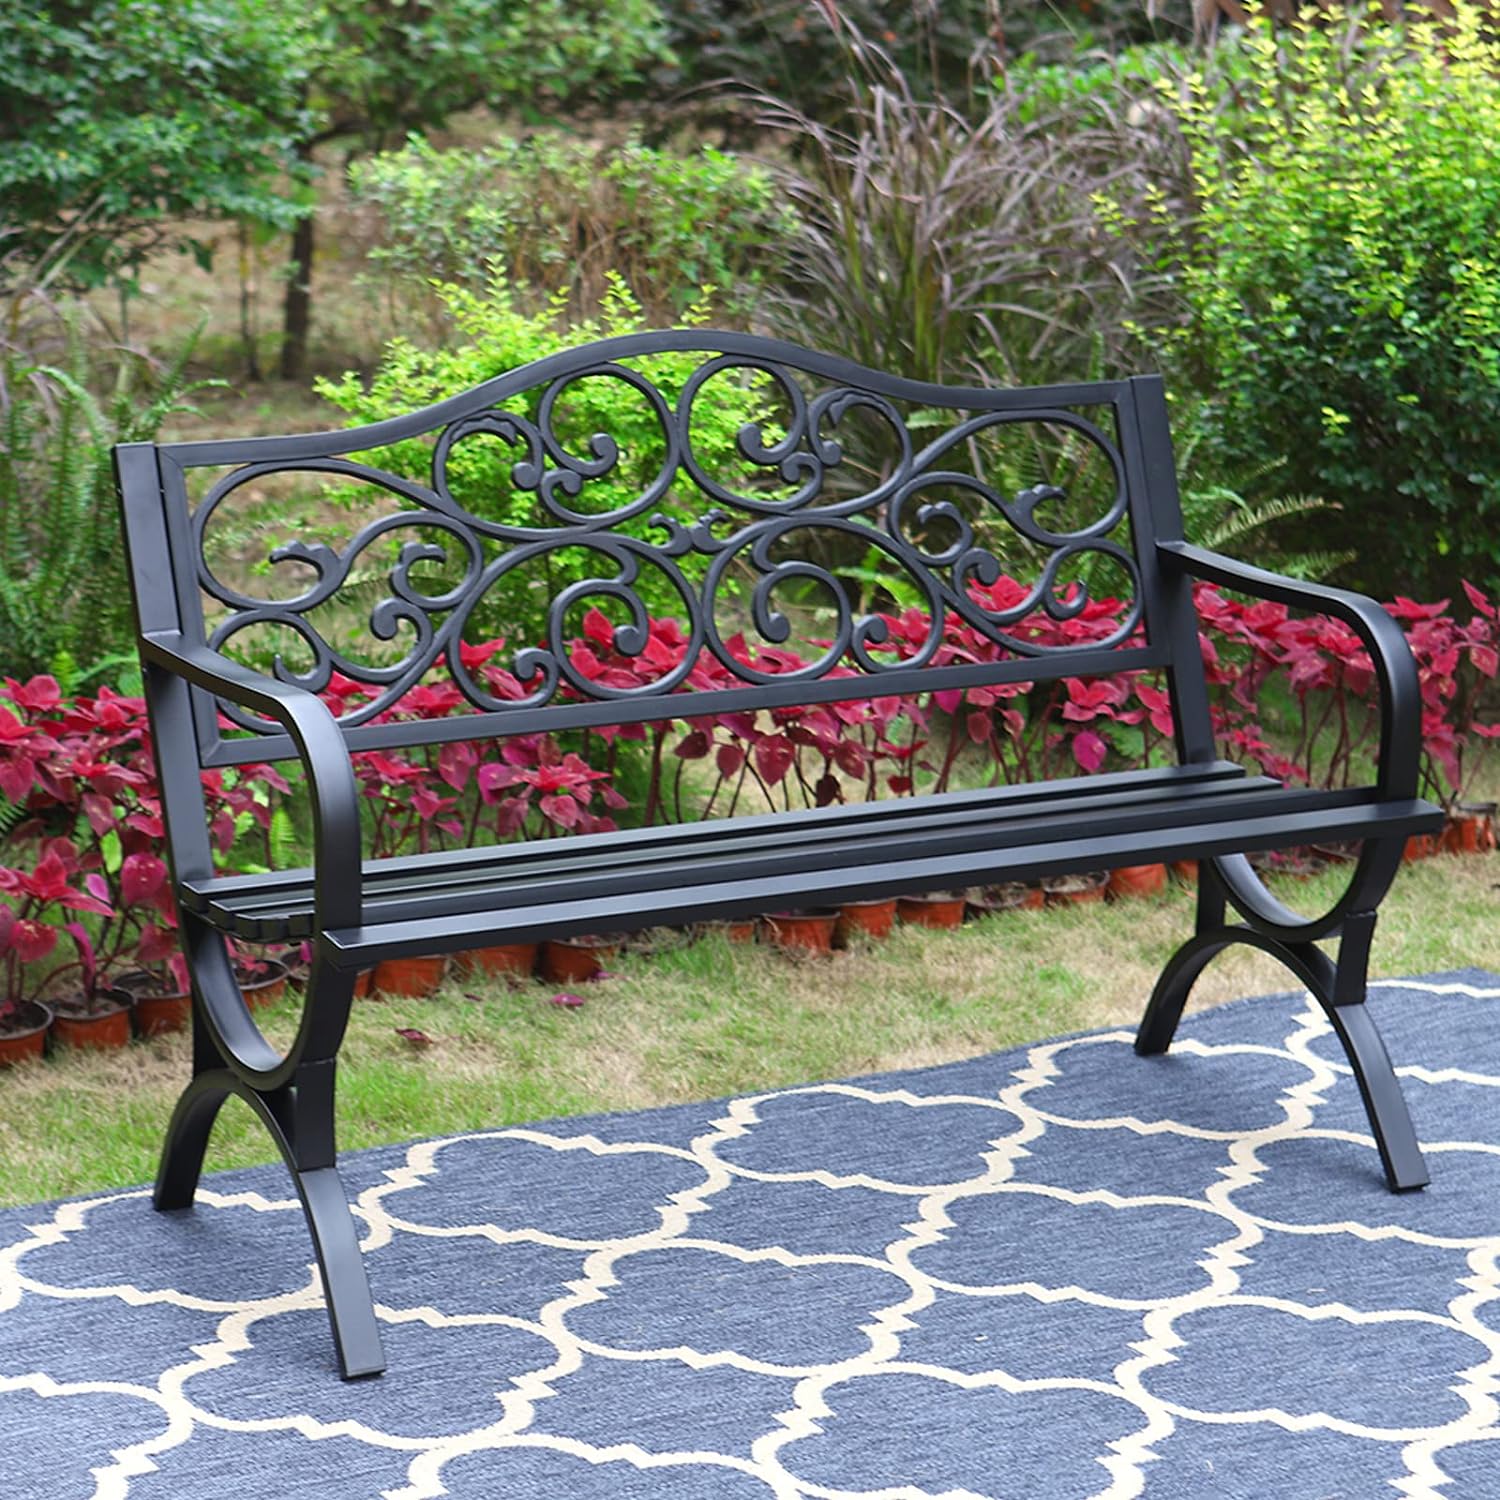 MFSTUDIO 50 Inches Outdoor Garden Bench,Cast Iron Metal Frame Patio Park Bench with Floral Pattern Backrest,Arch Legs for Porch,Lawn,Garden,YardBlack